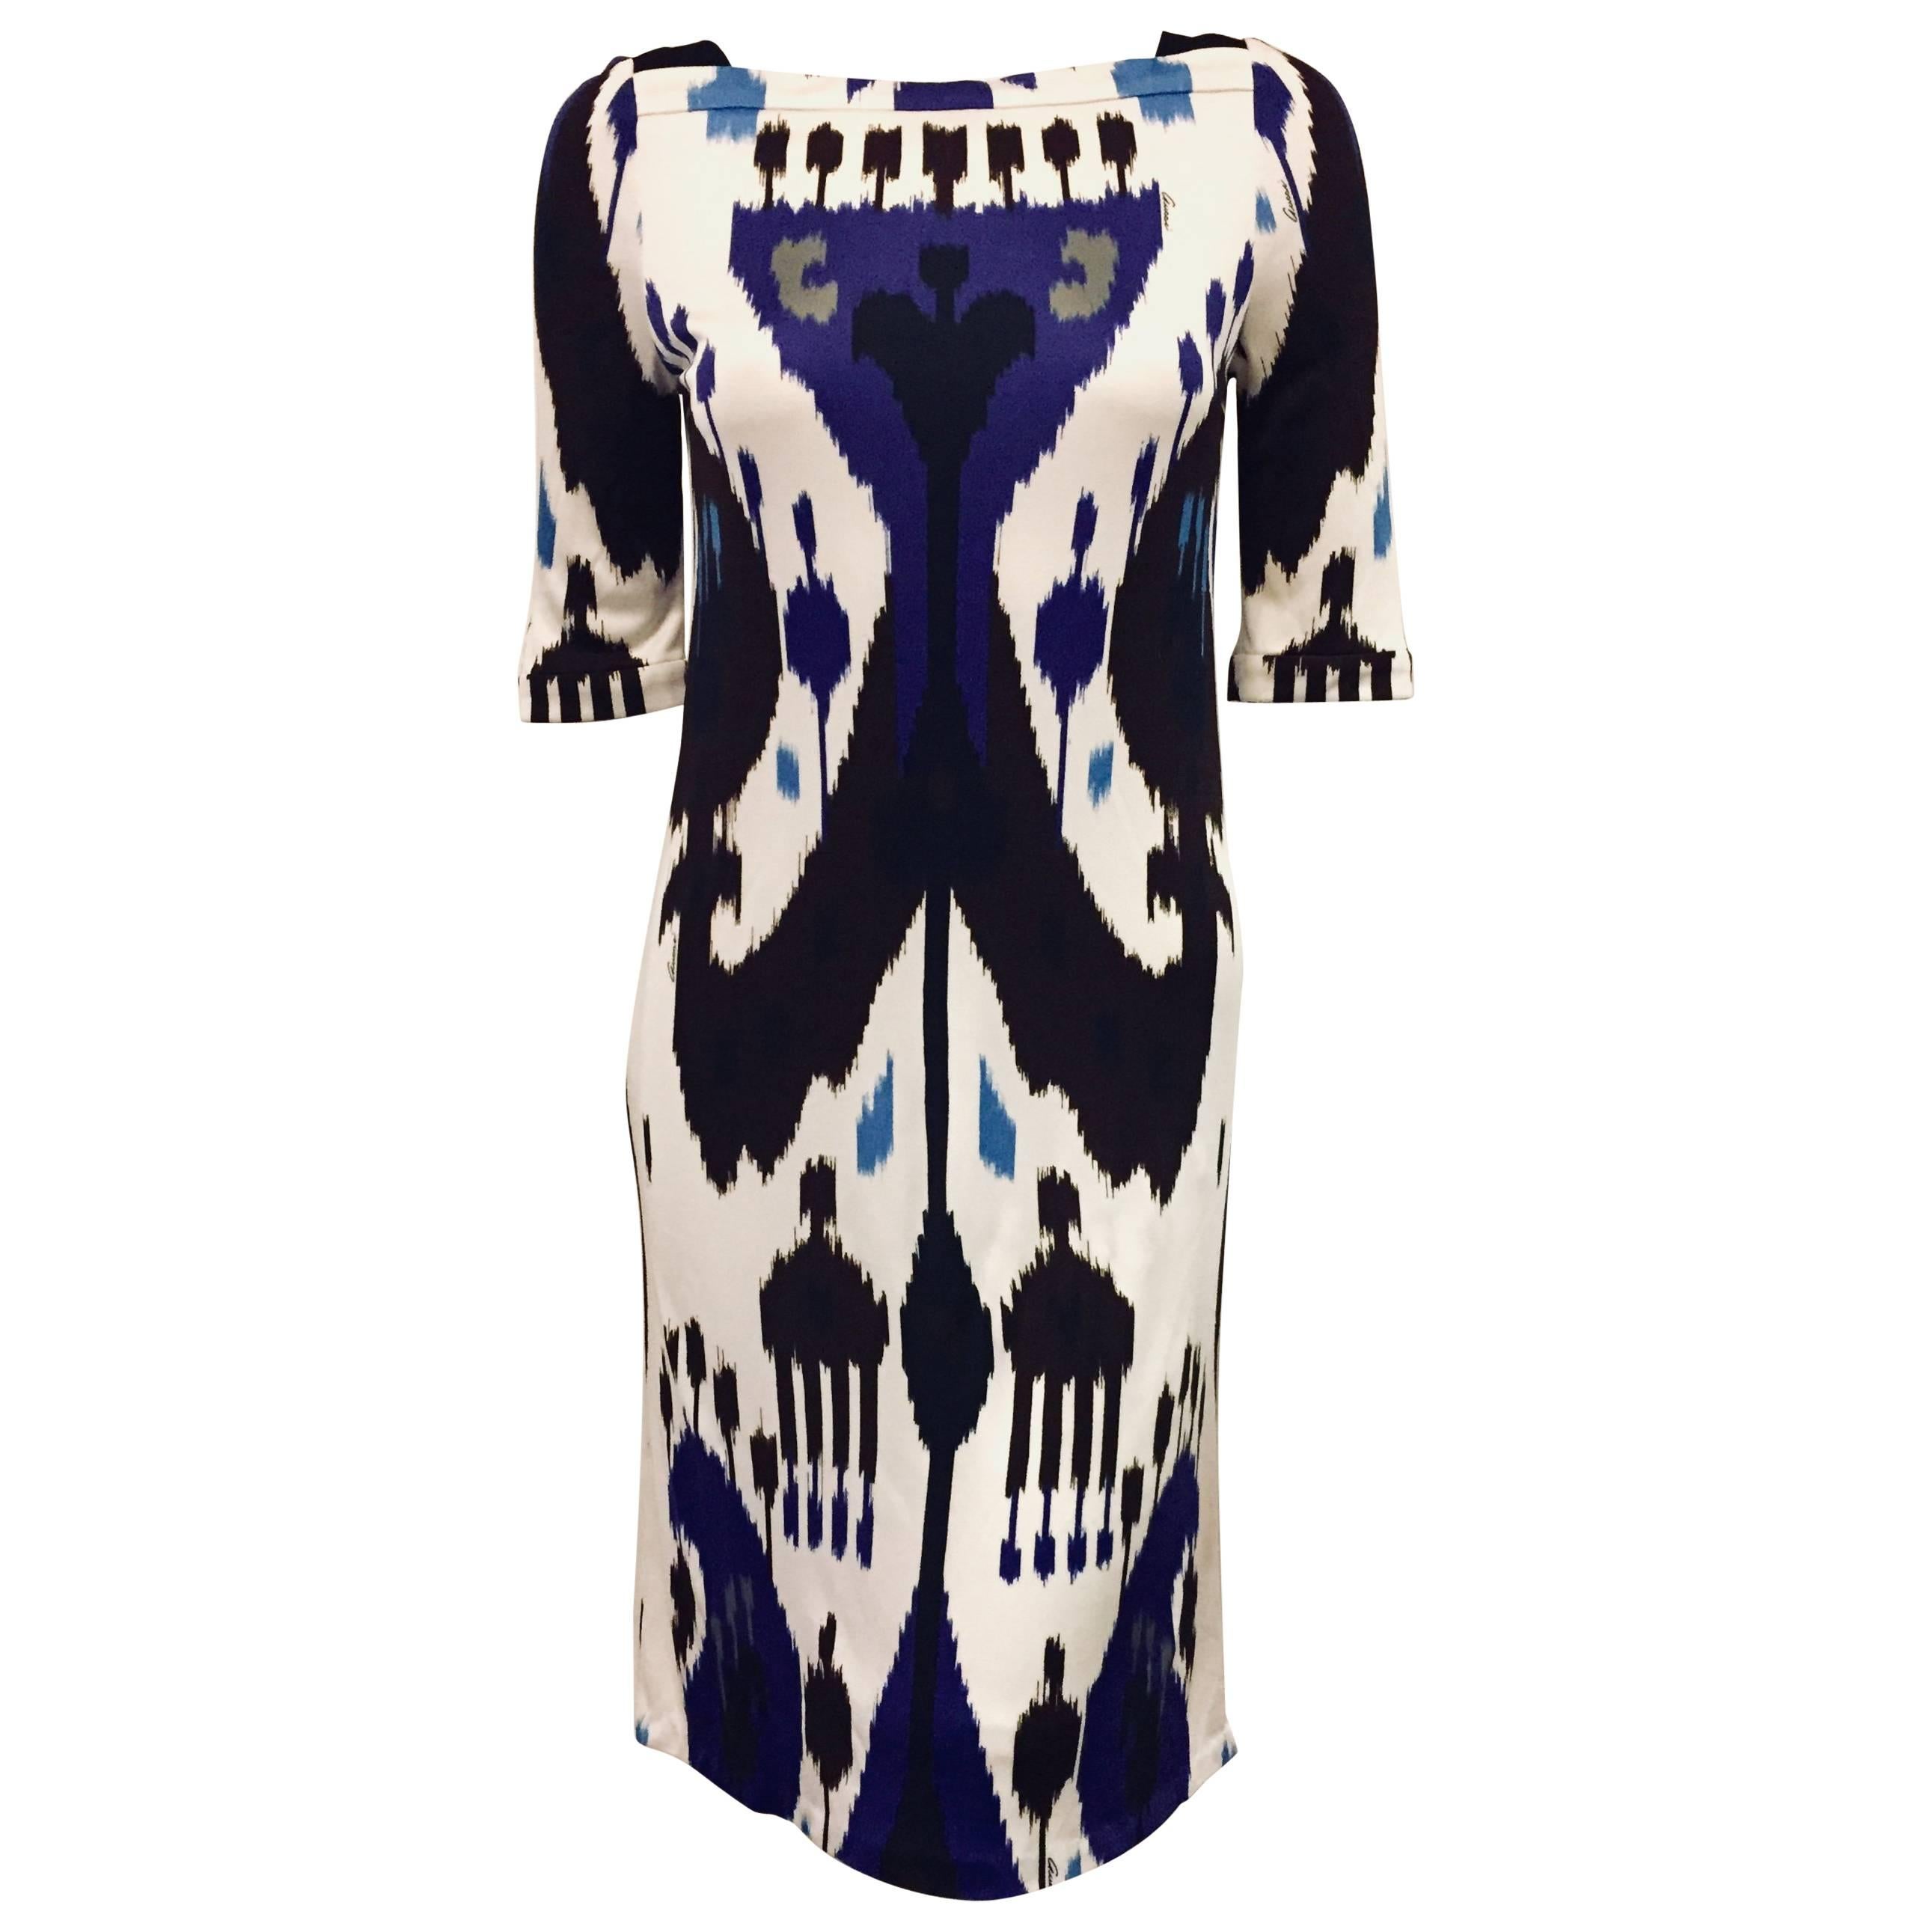 Gucci Blue, White and Black Ikat Tribal Print Silk Dress 42 EU For Sale